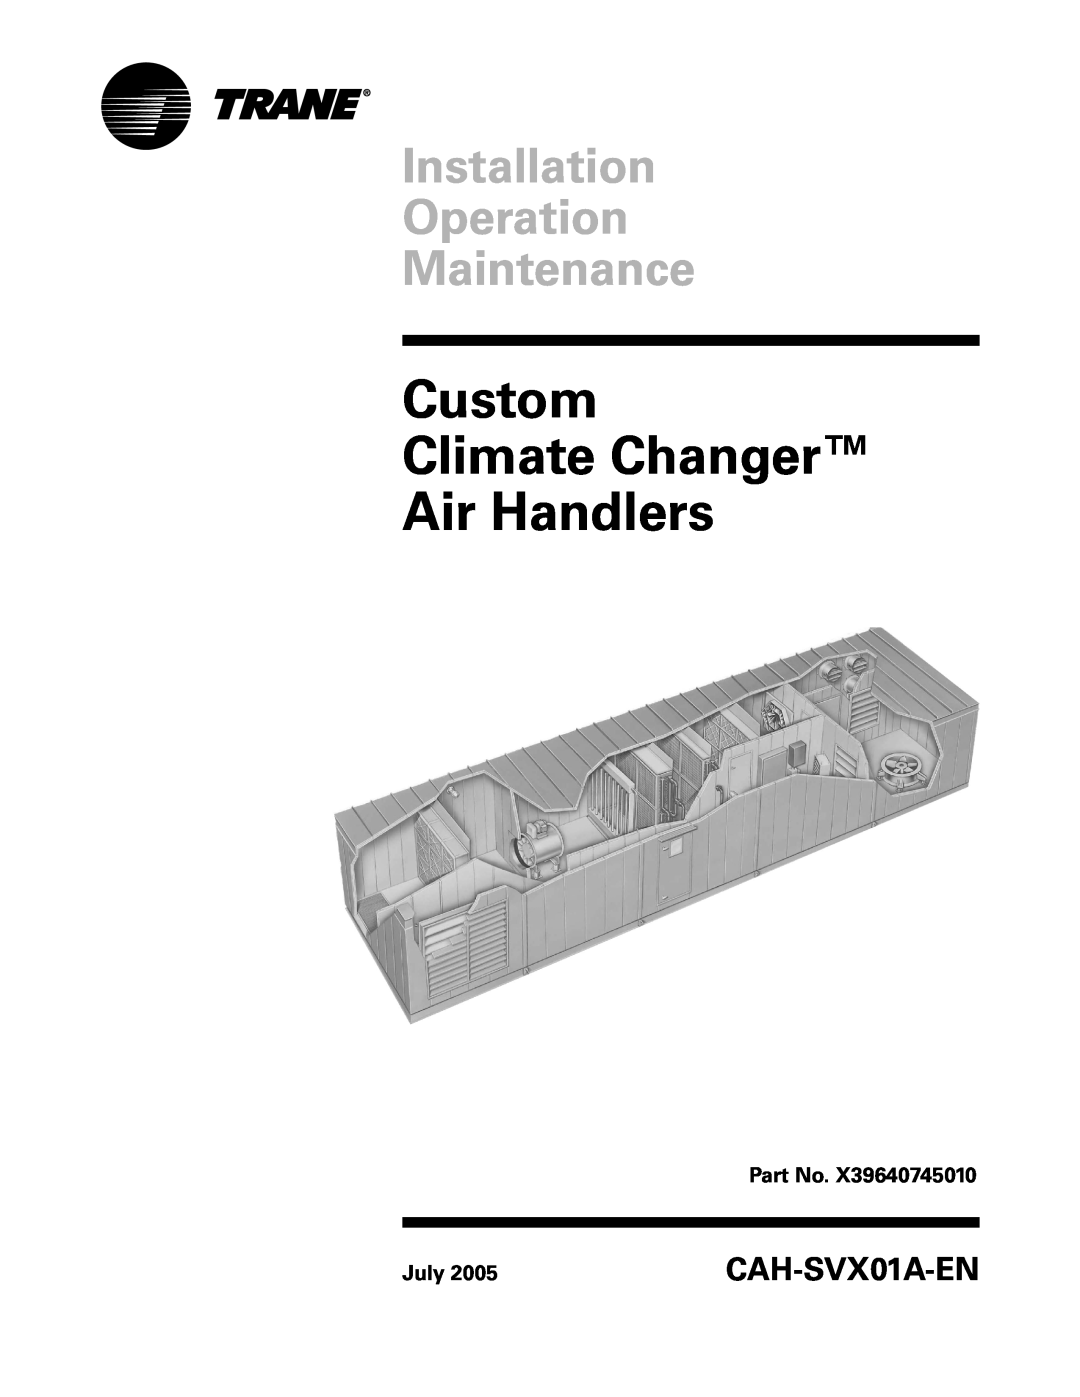 Trane Custom Climate Changer Air Handlers manual July, Installation Operation Maintenance, CAH-SVX01A-EN 